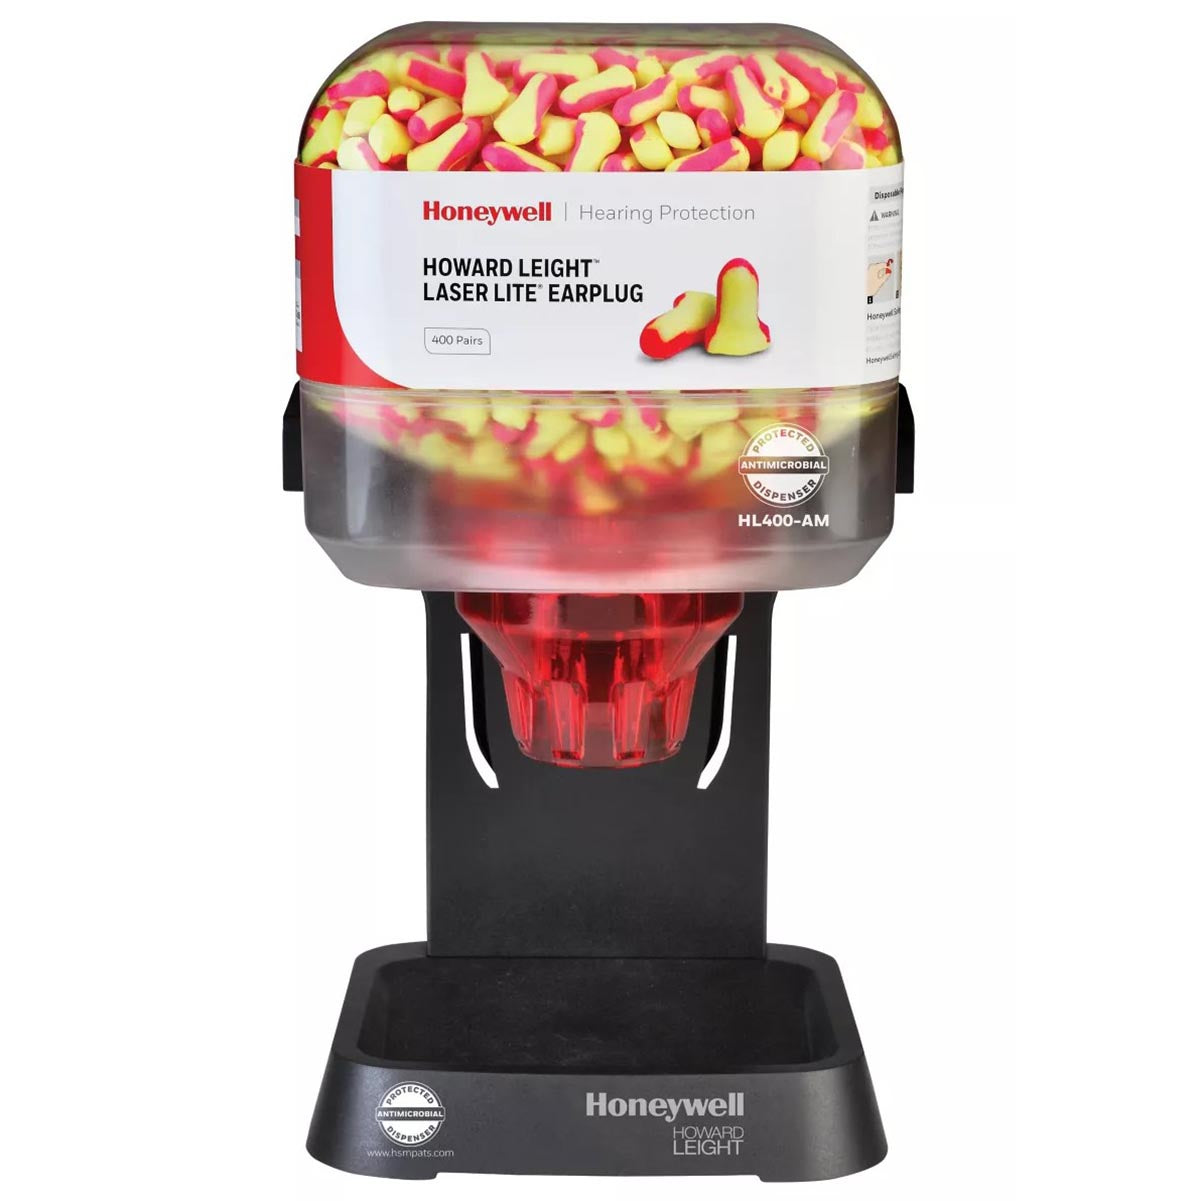 Honeywell Howard Leight HL400 Dispenser with 400 pairs Laser Lite Earplugs